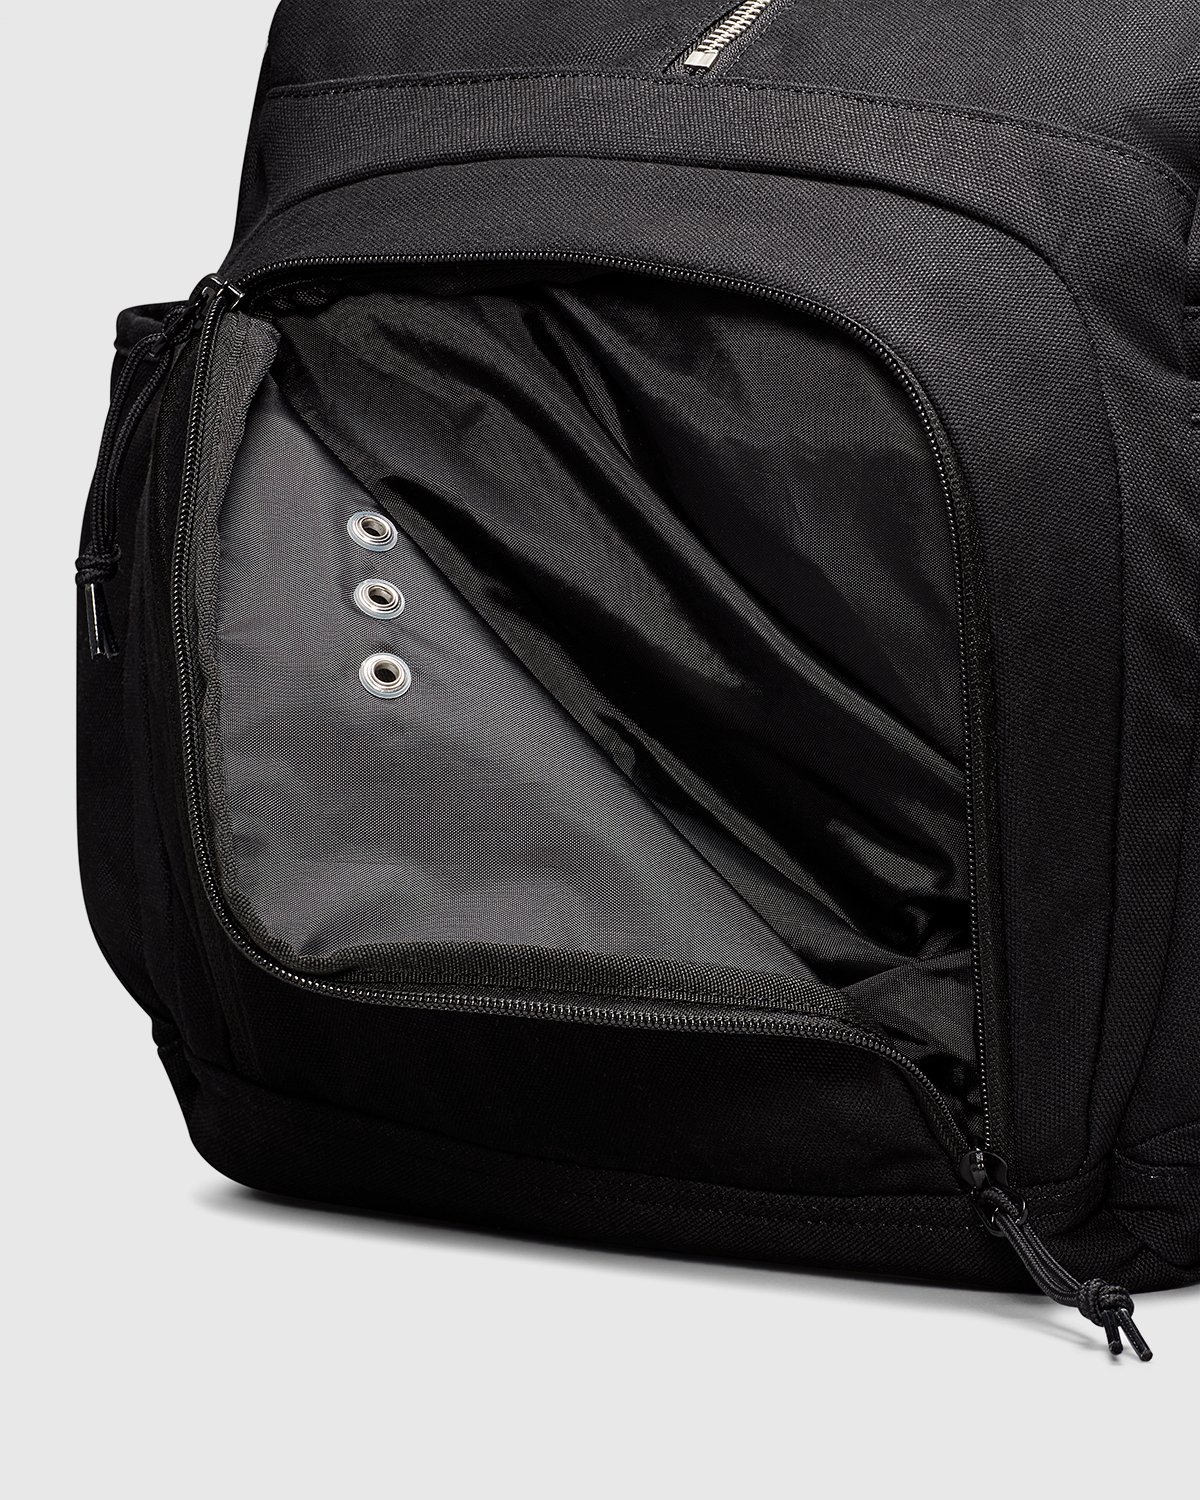 Converse x Joshua Vides - Basketball Utility Bag Black - Accessories - Black - Image 3